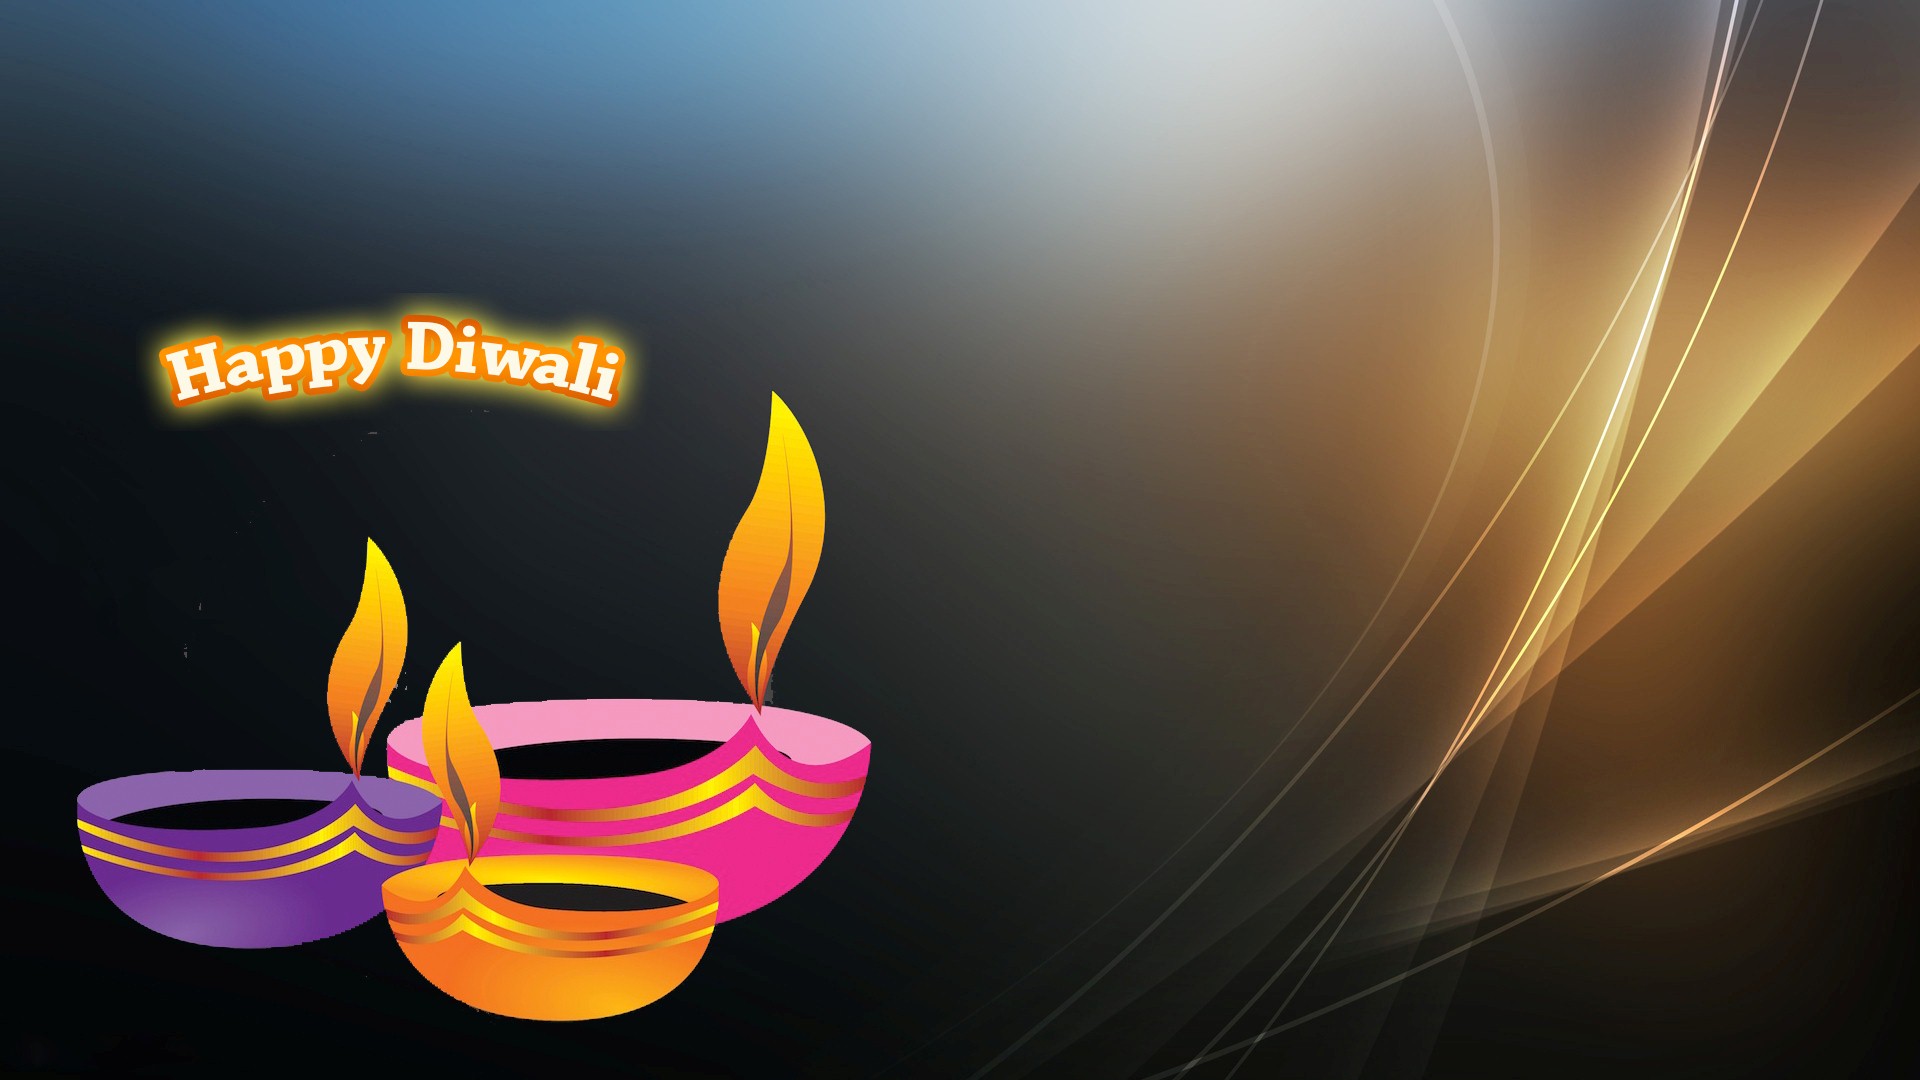 Festival Diwali Lamp Photo In Black Background Image HD